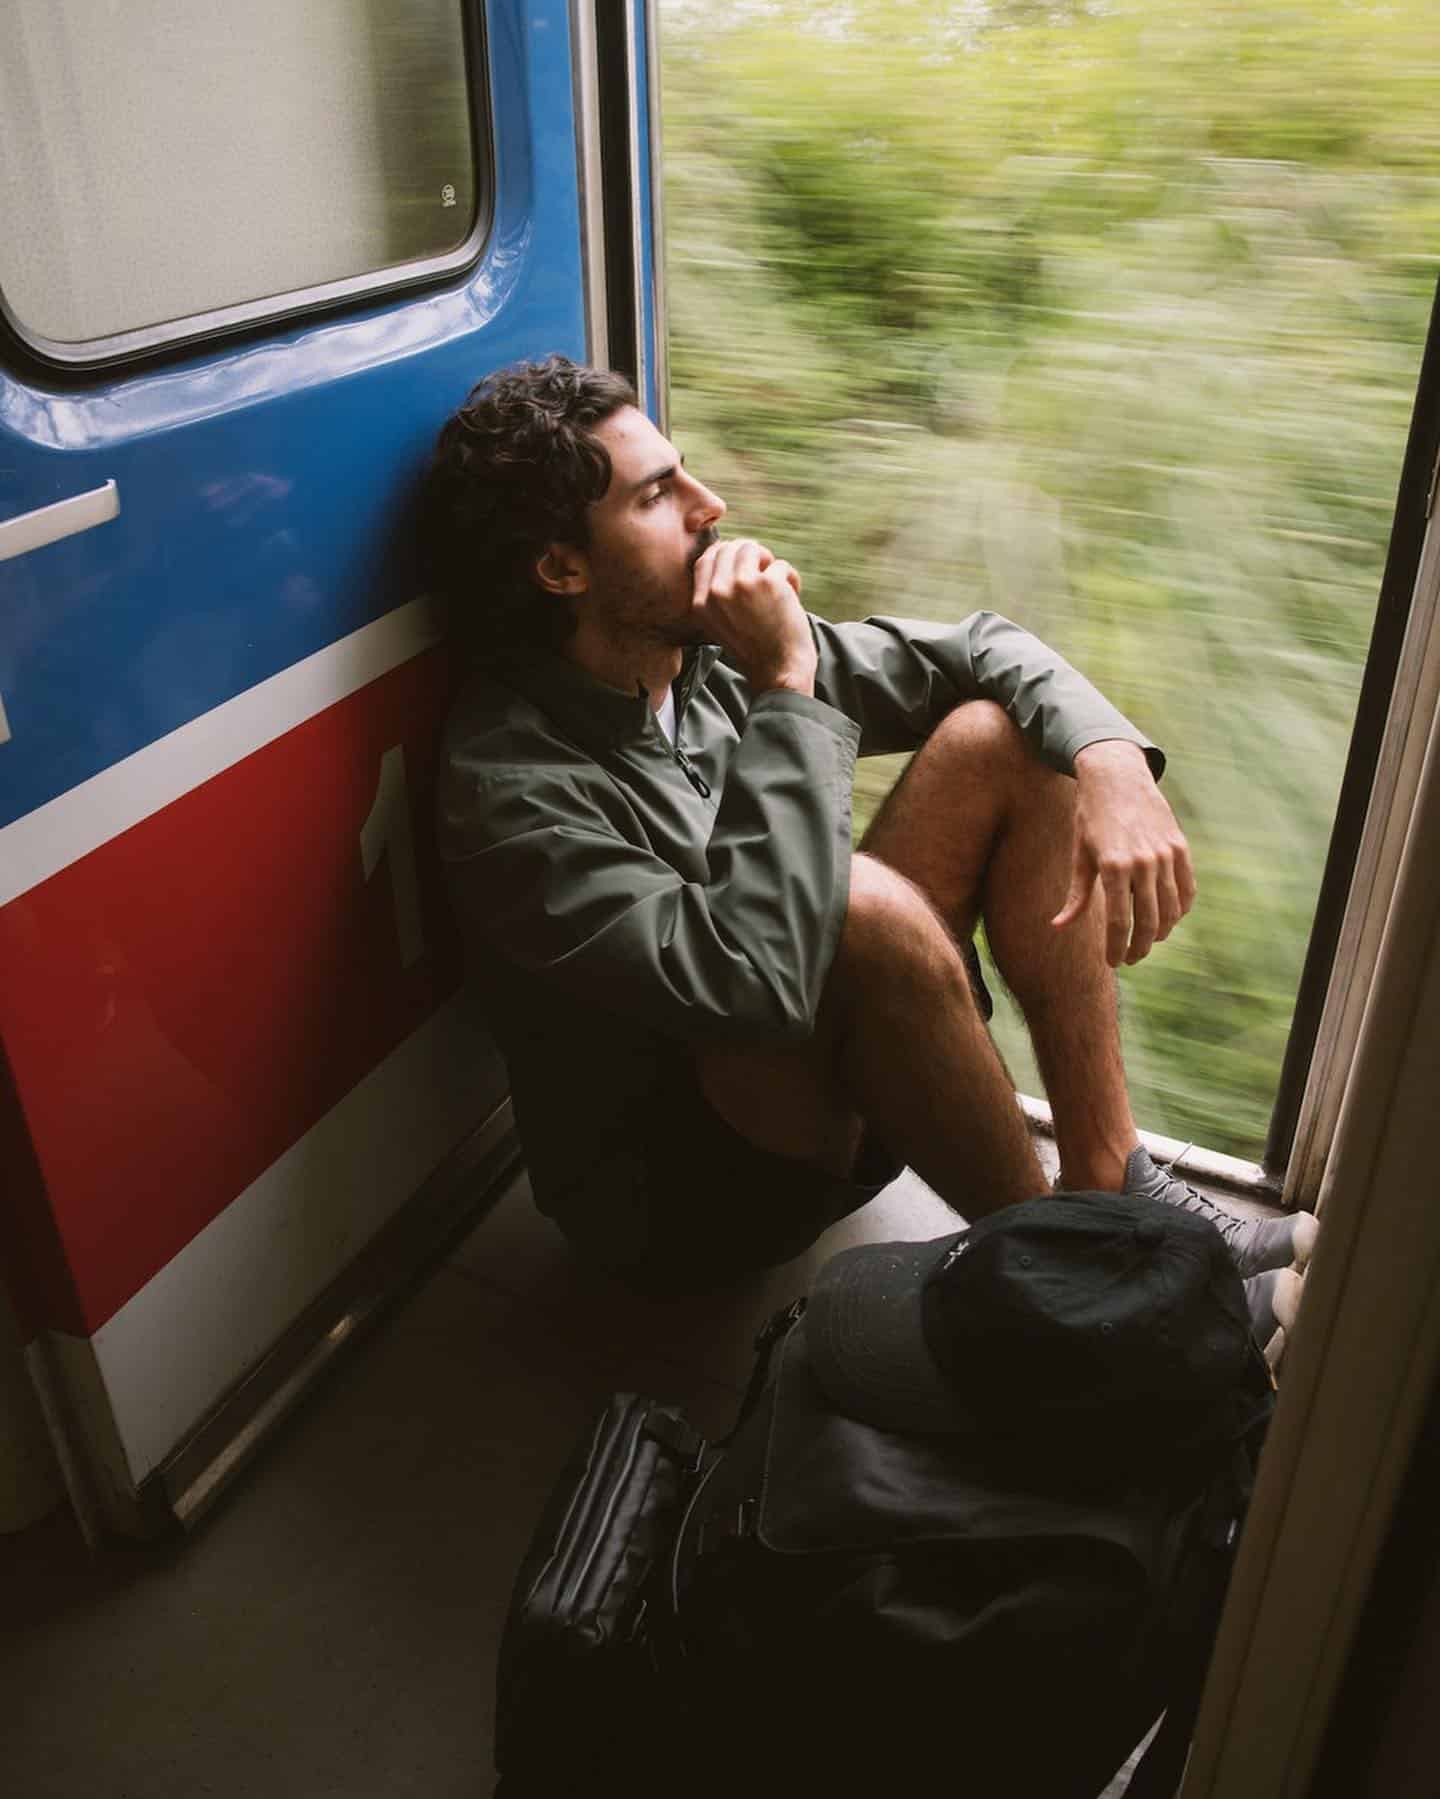 Gorpcore style: man on a train wearing a light jacket